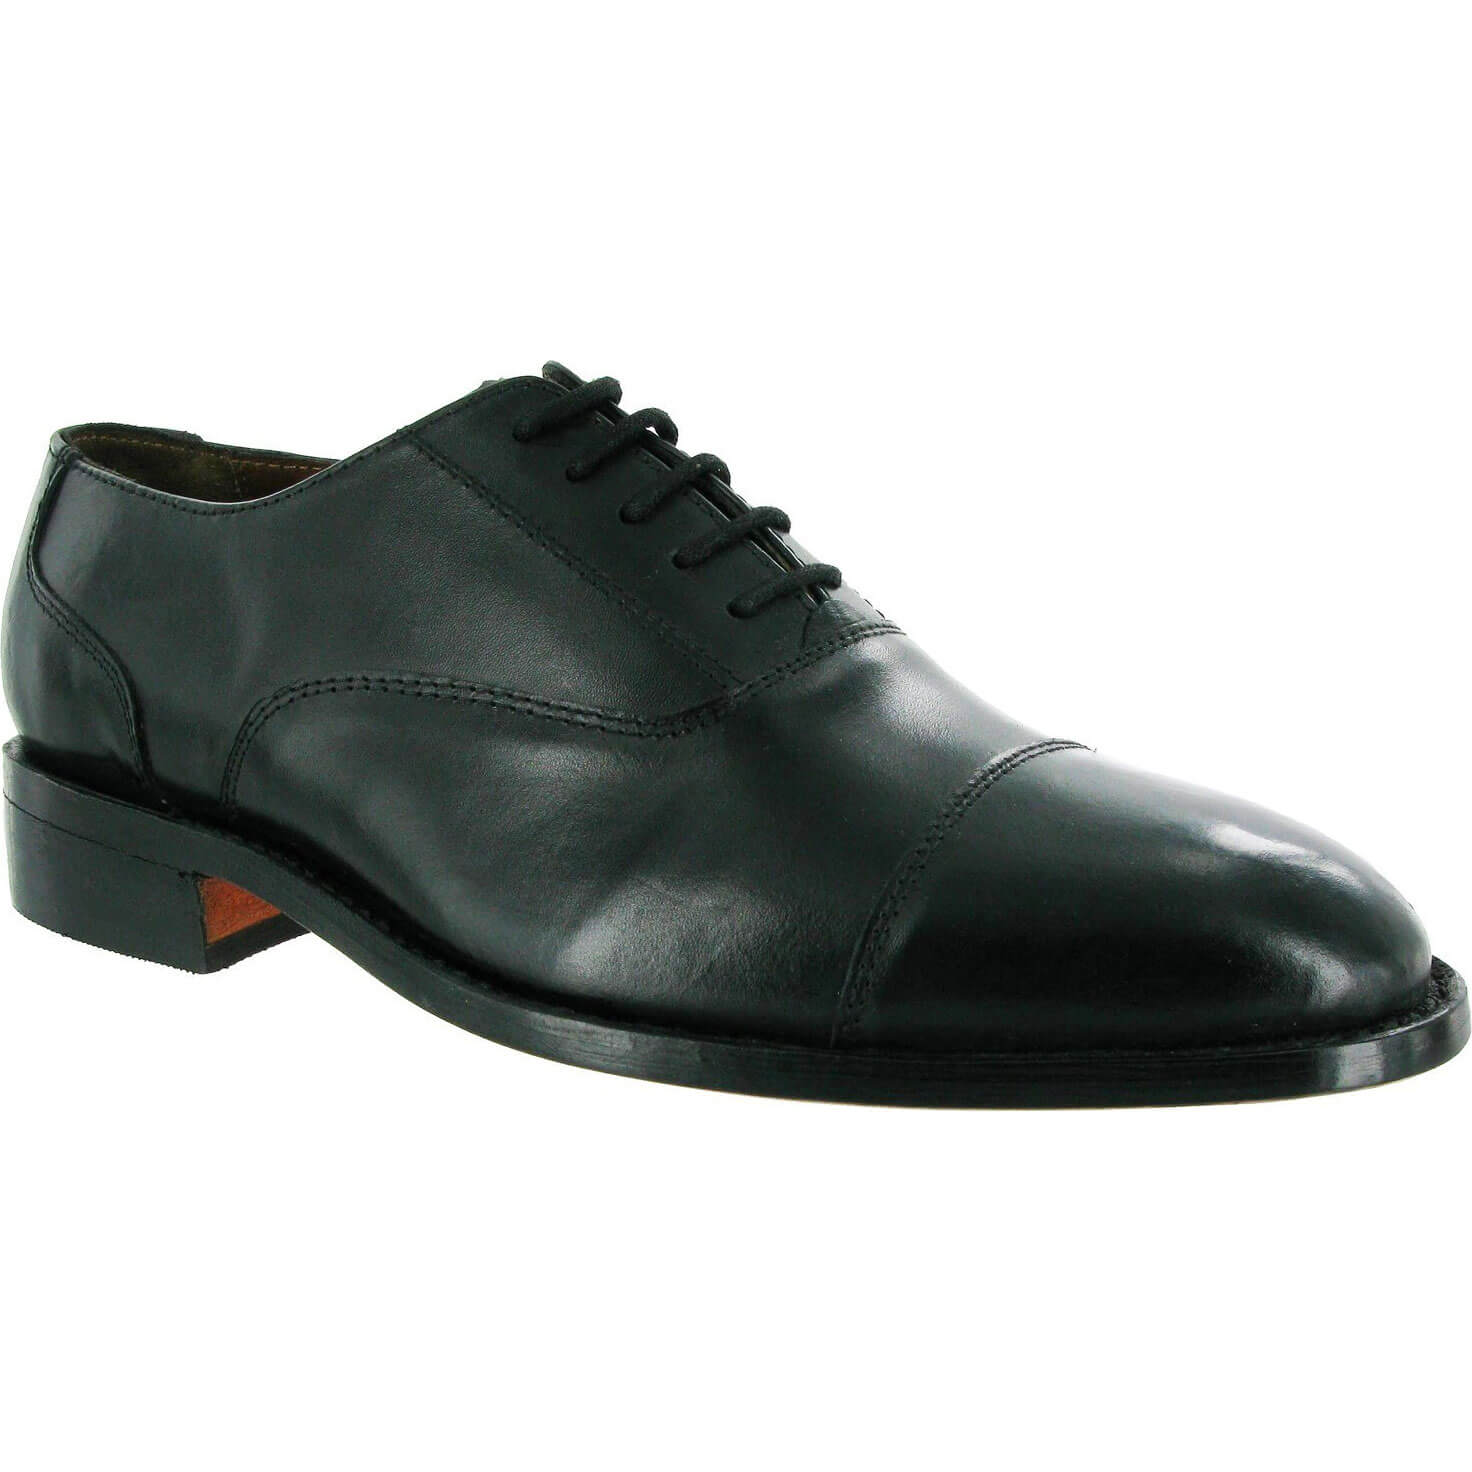 Image of Amblers James Leather Soled Oxford Dress Shoe Black Size 11